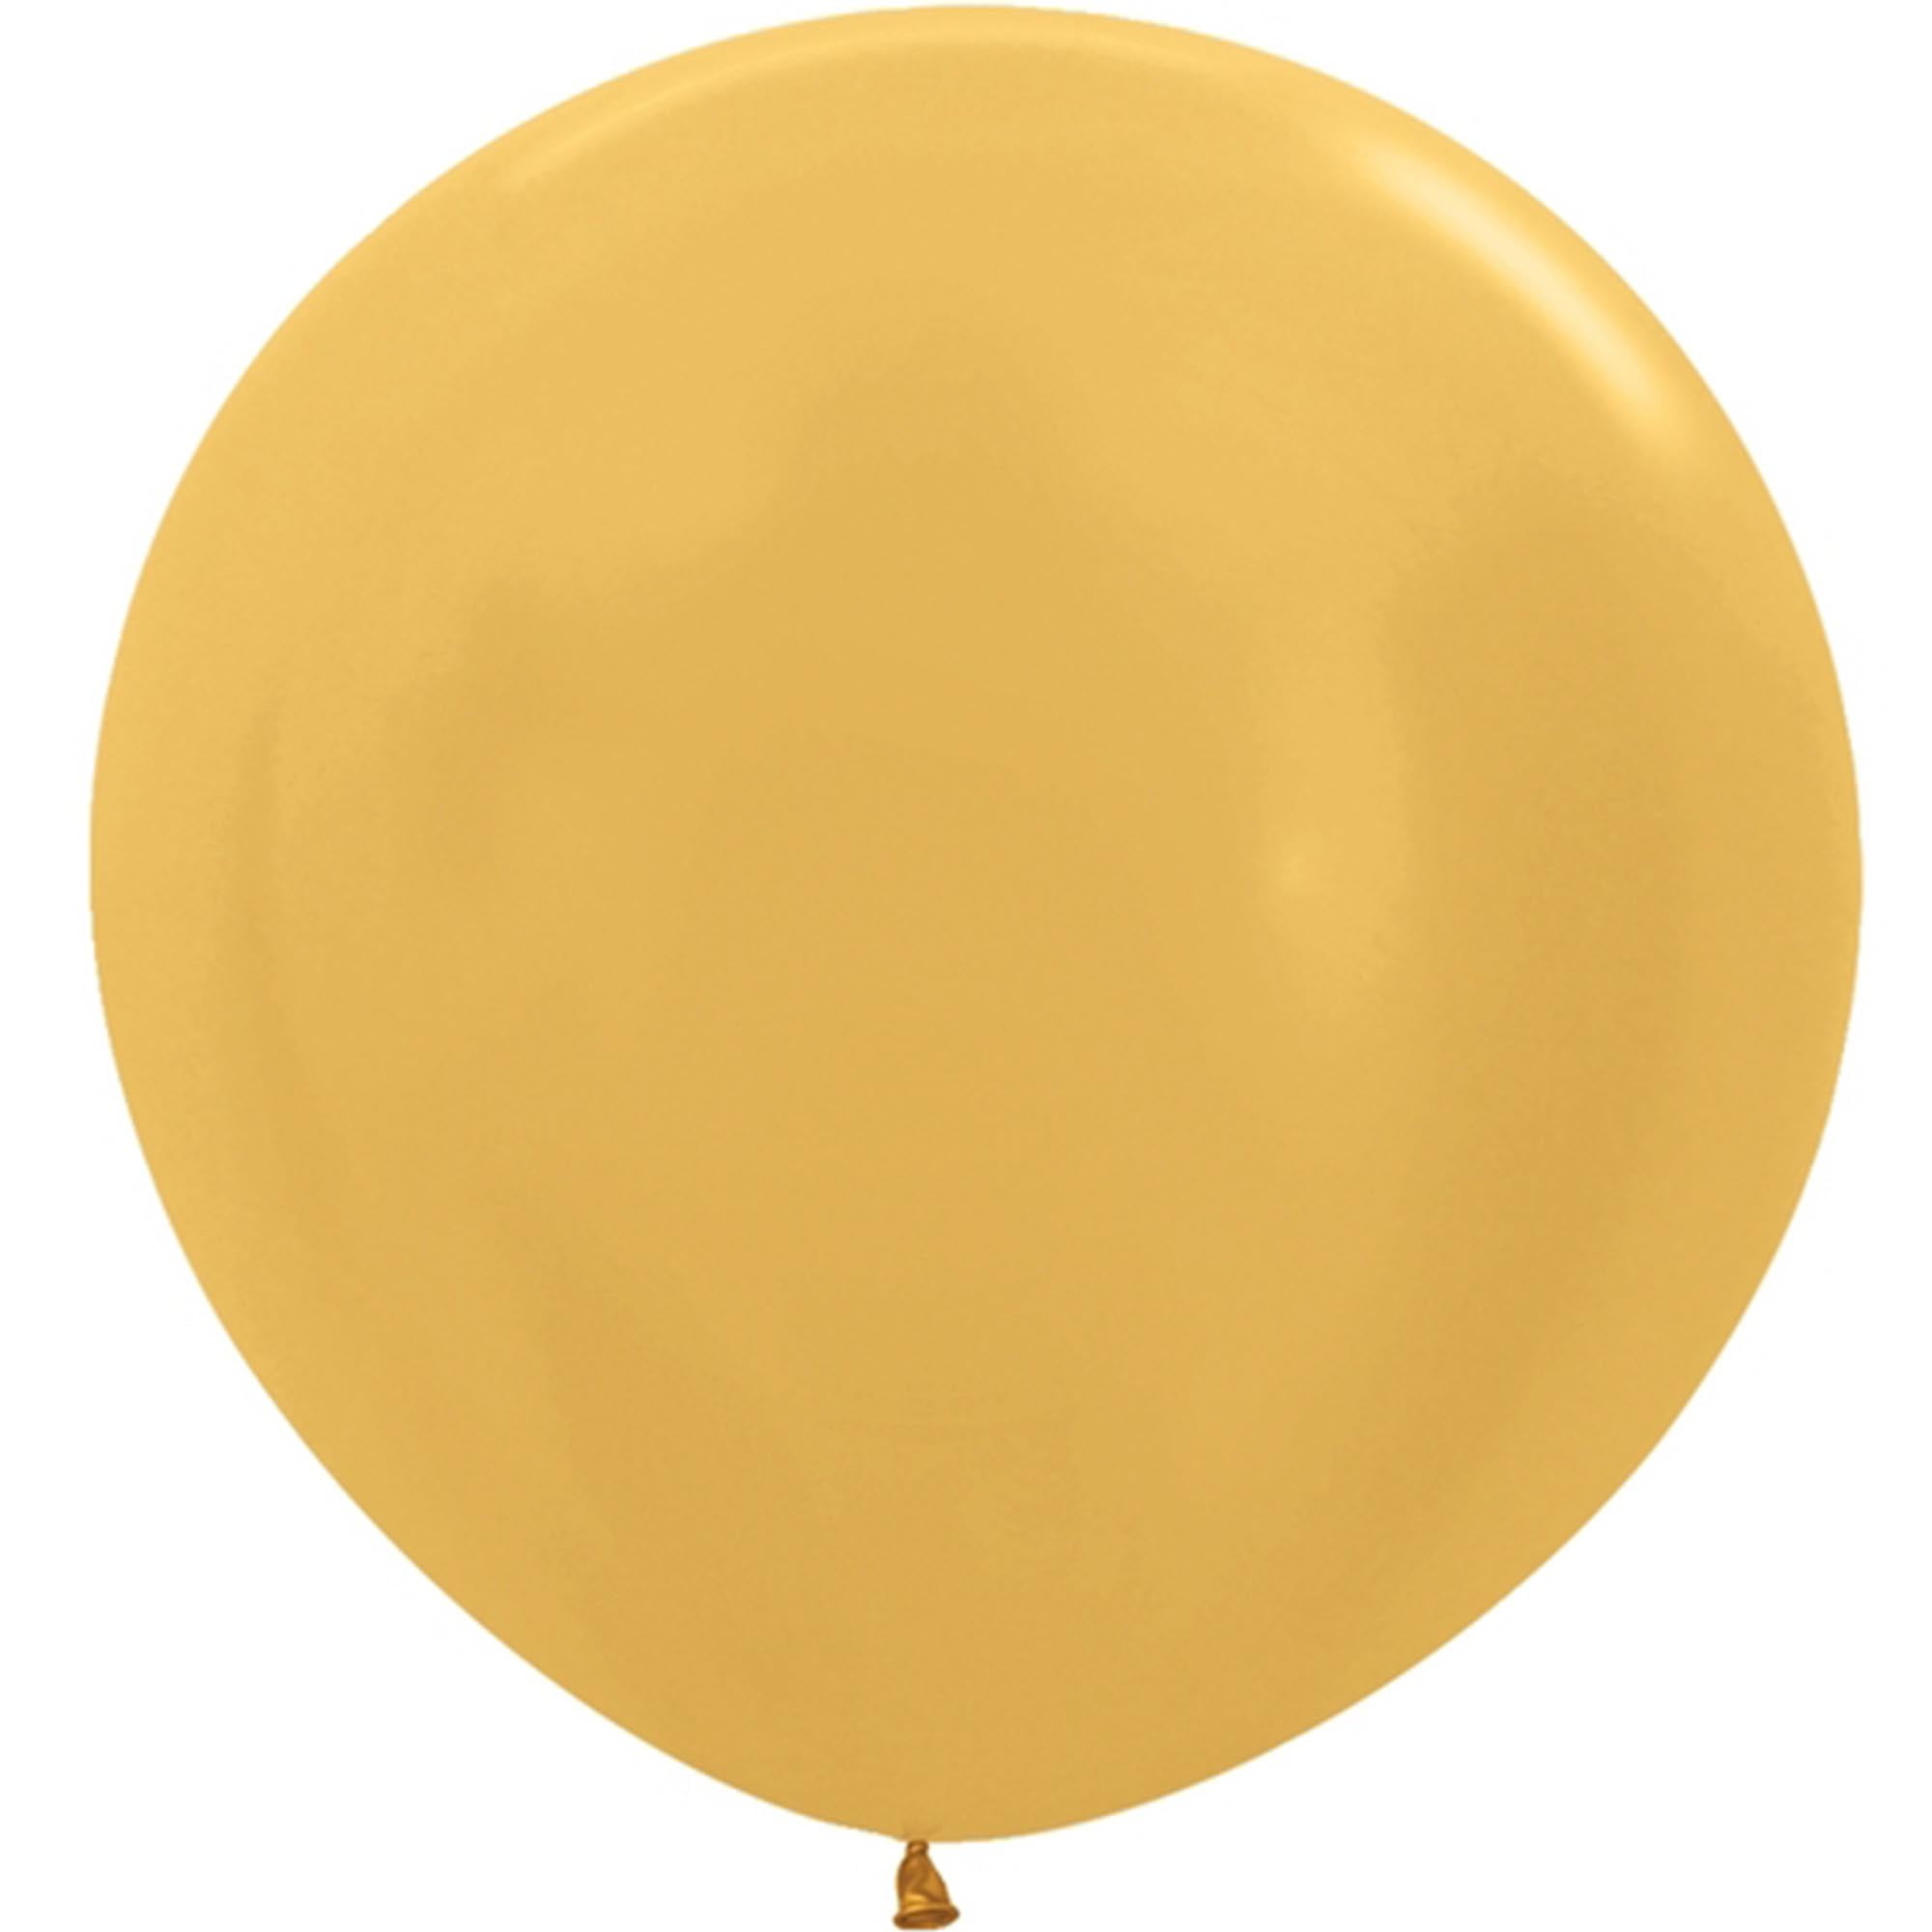 Confetti Balloon Giant Gold Star 90cm 36inch clear qualatex latex NEW 